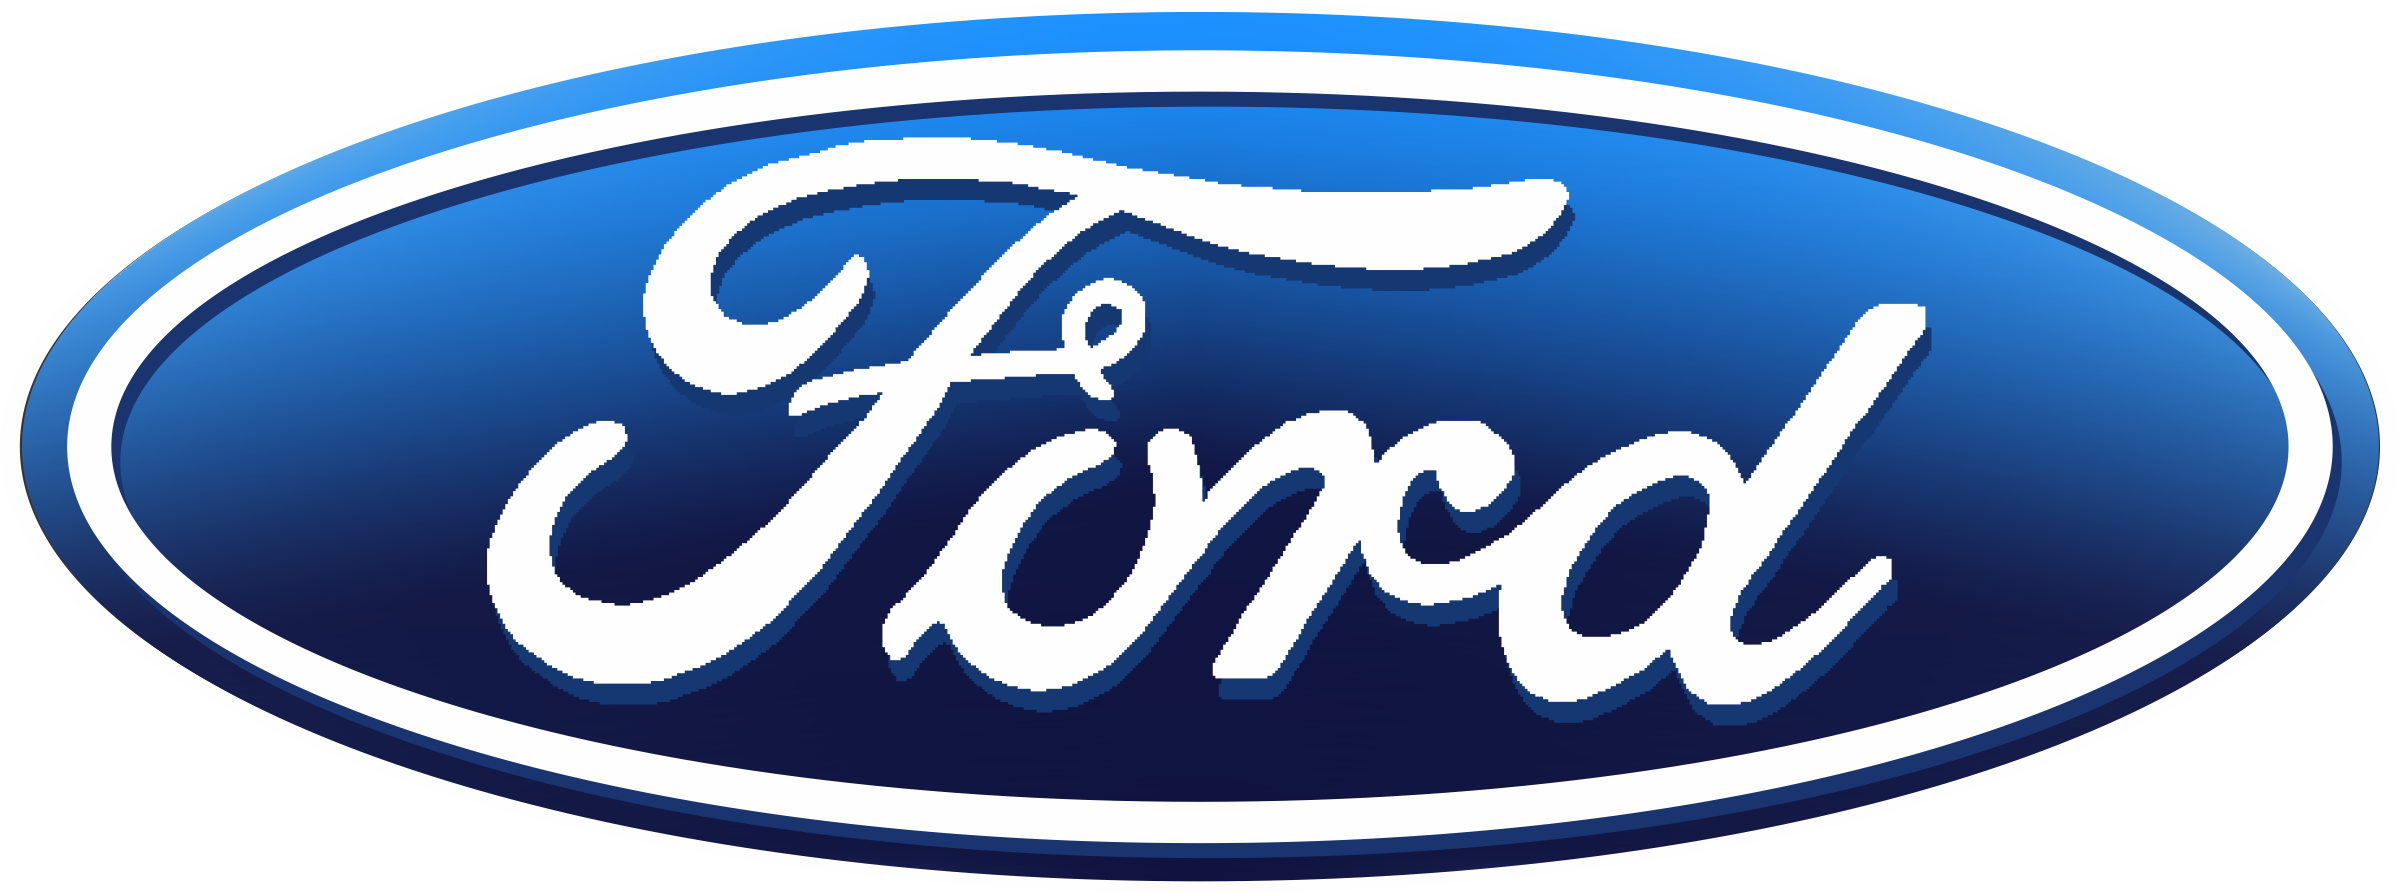 Ford logosu PNG Dosyası